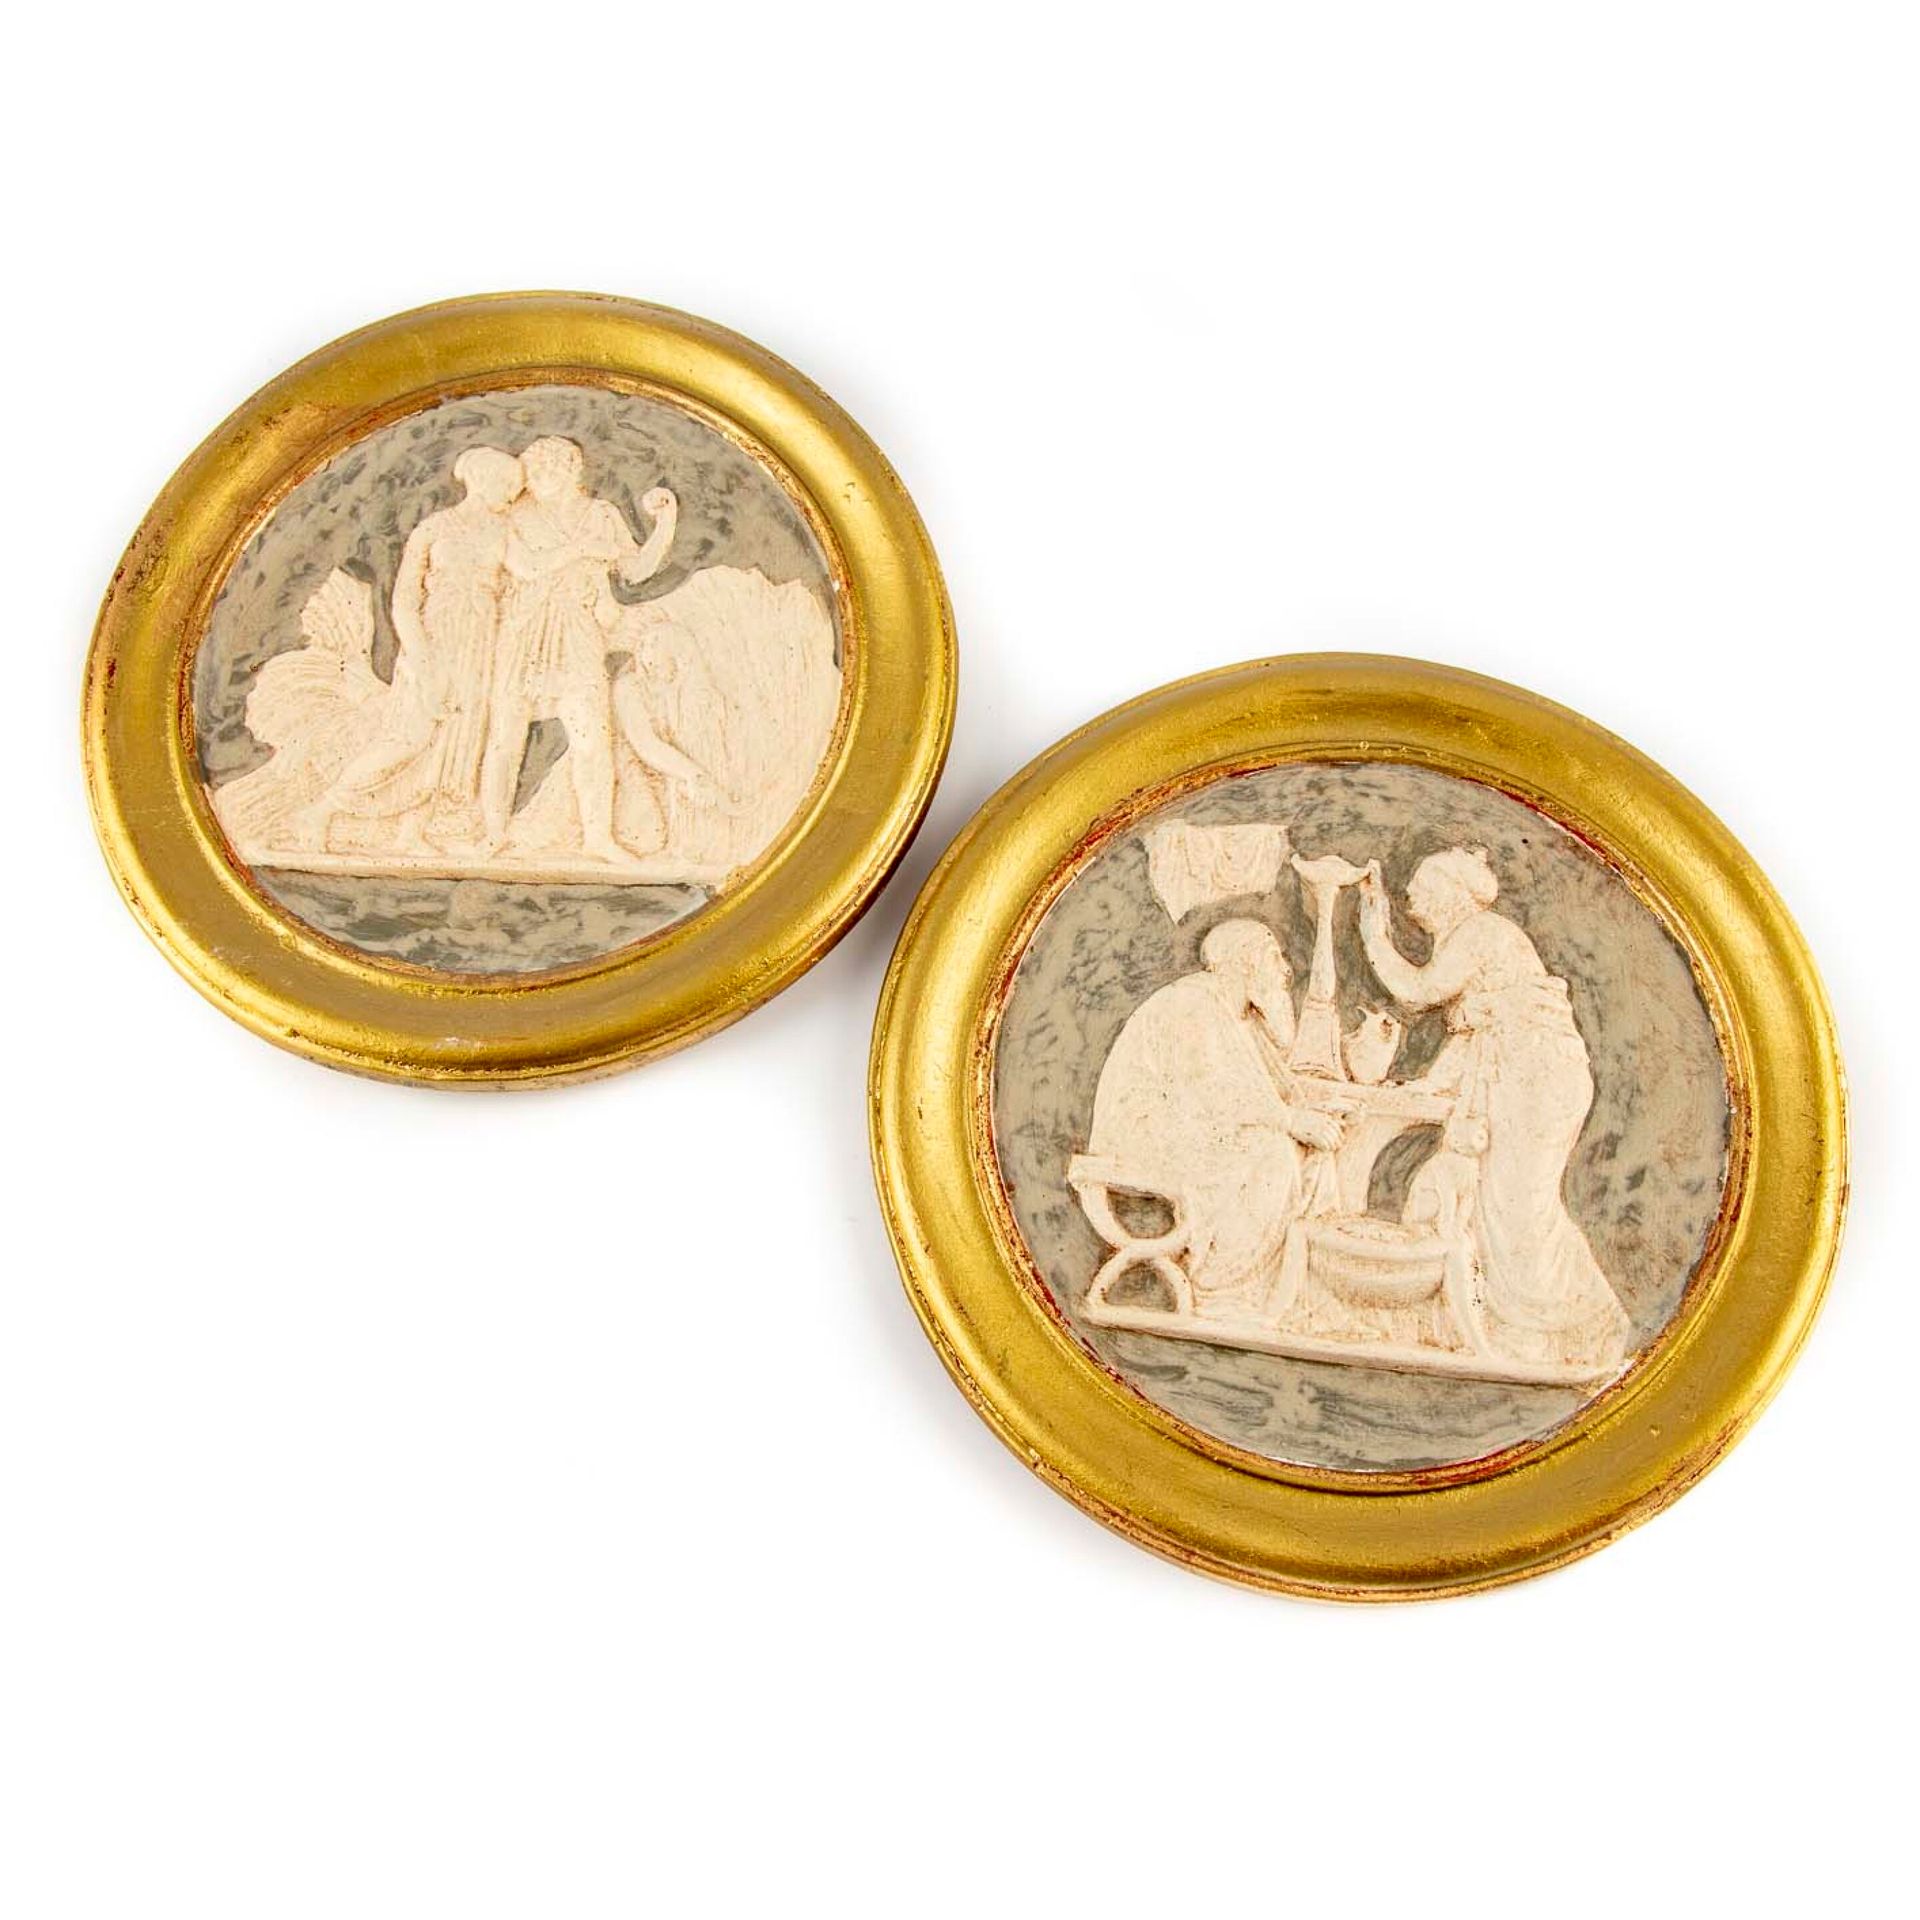 Null 两块拍打石膏的奖章

古典风格的场景

19世纪

D.18厘米